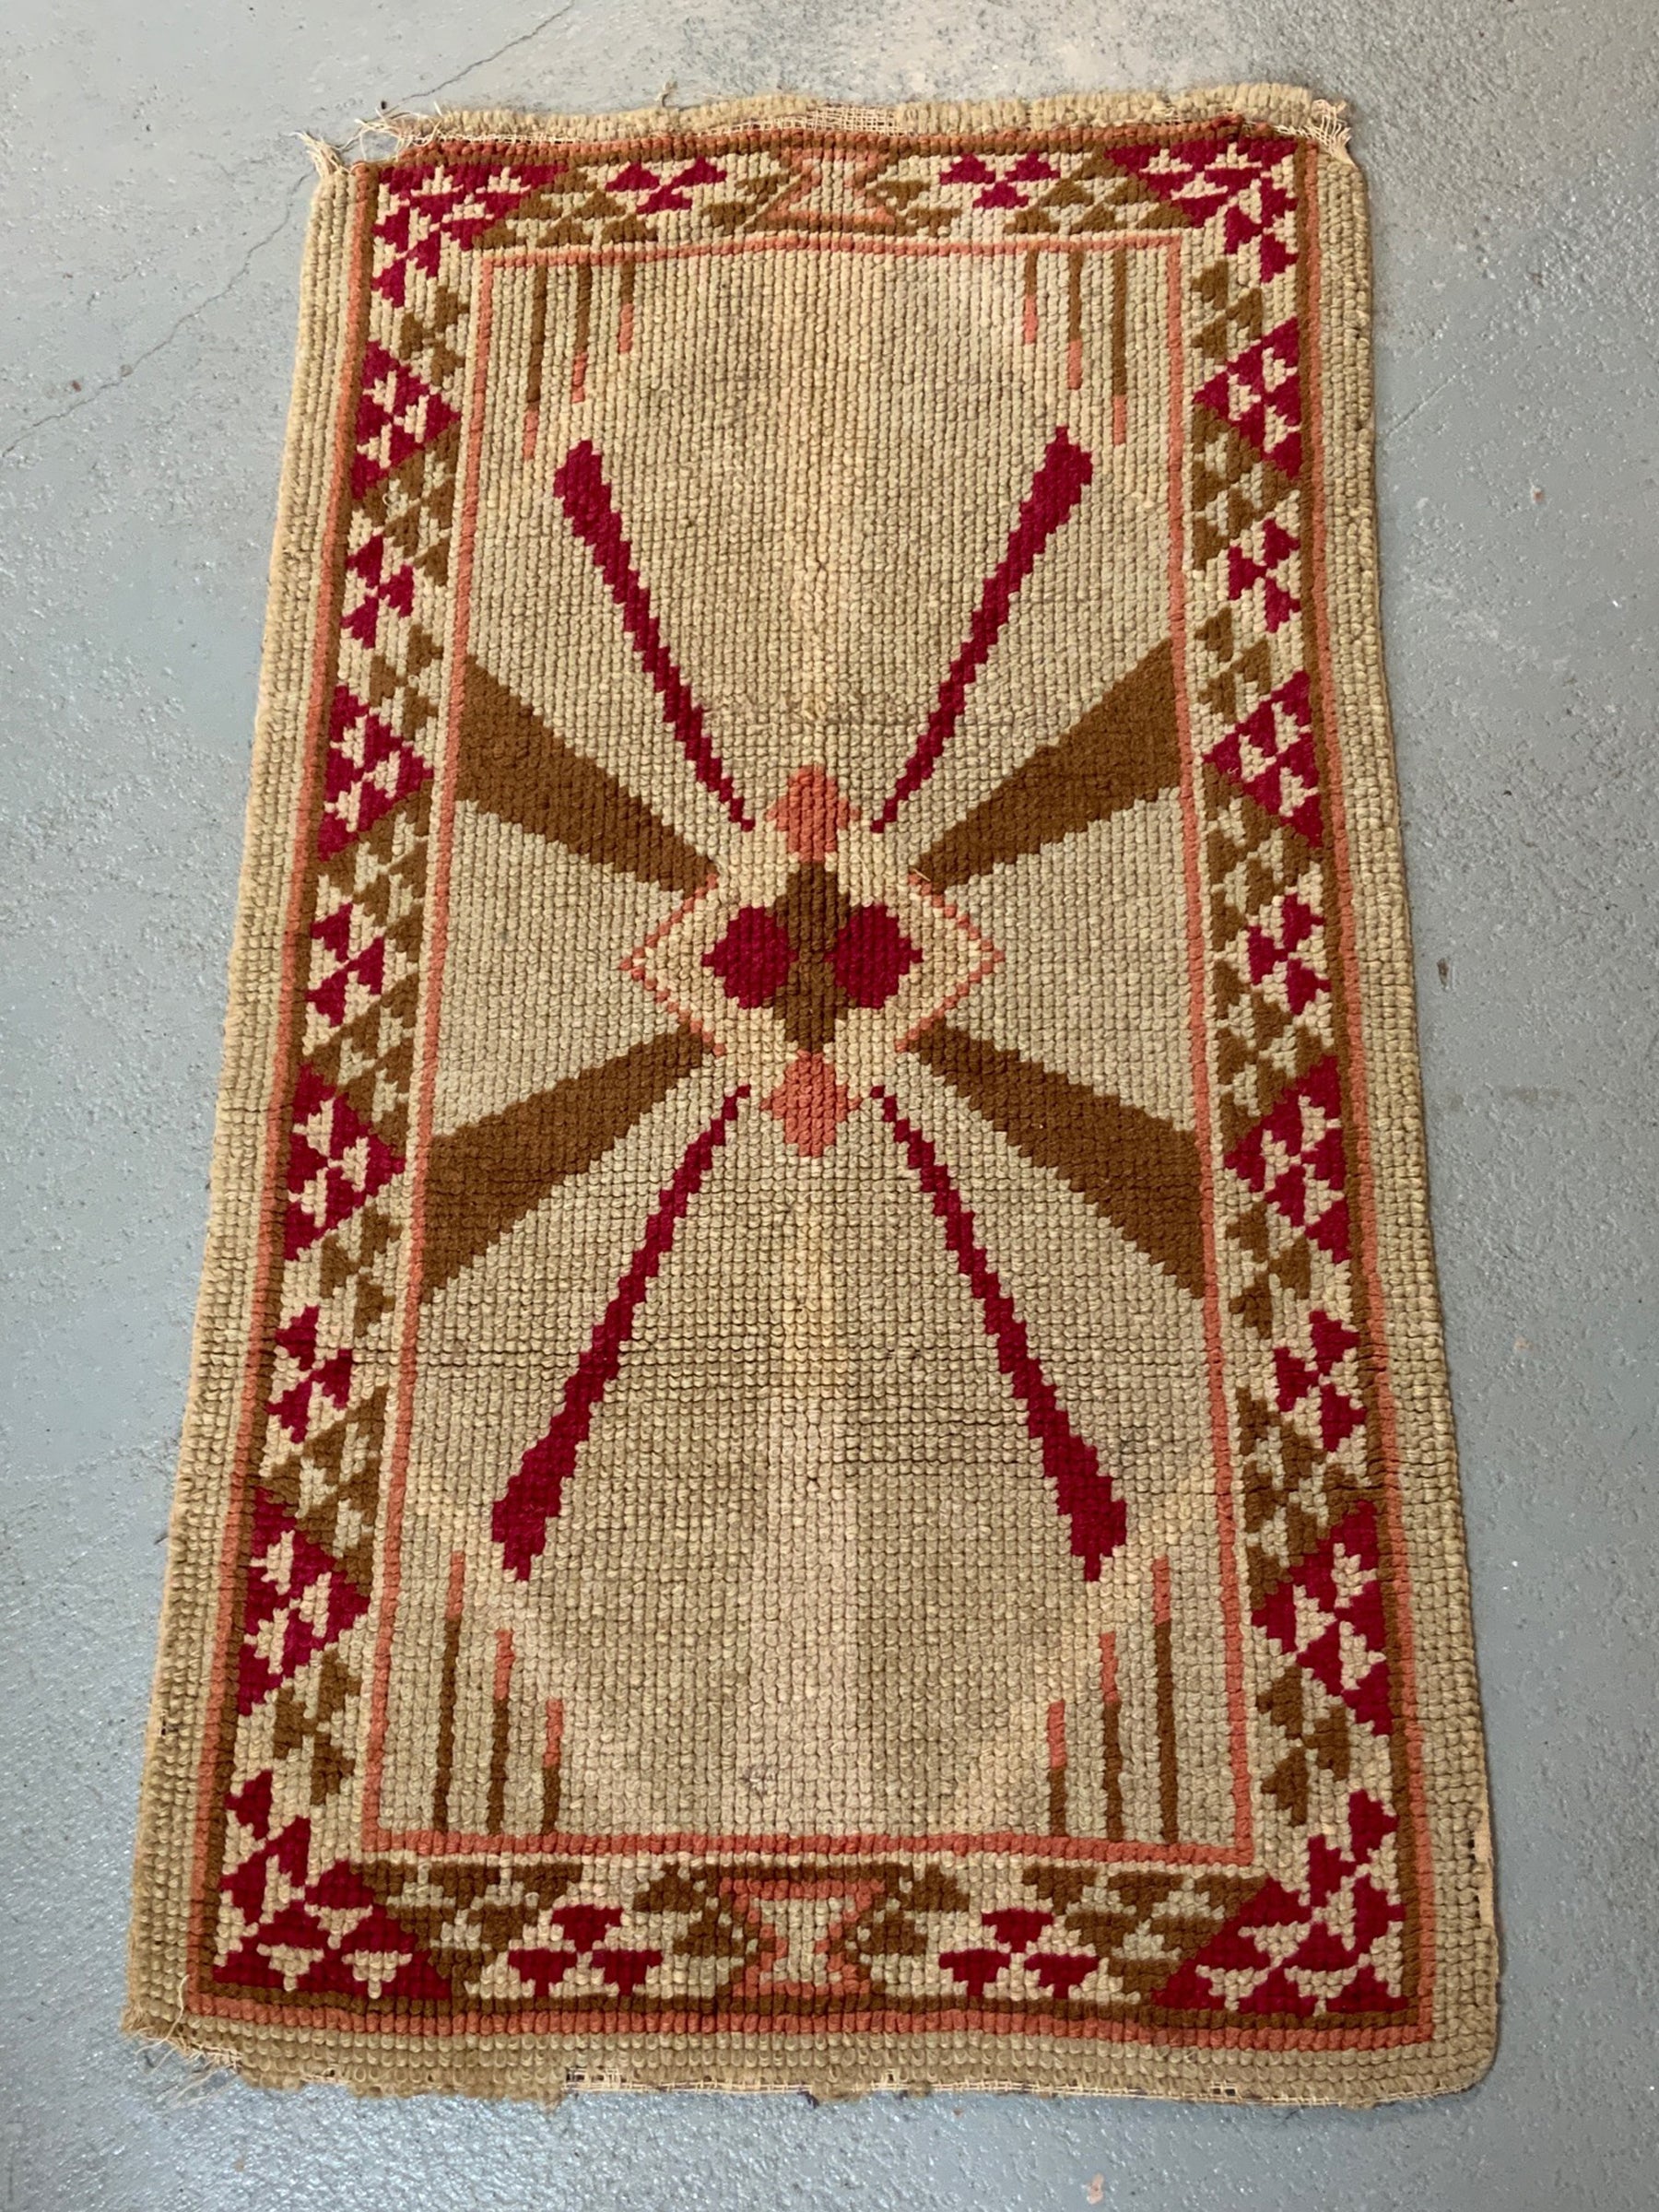 British small readicut Art Deco rug (132 x 74cm)